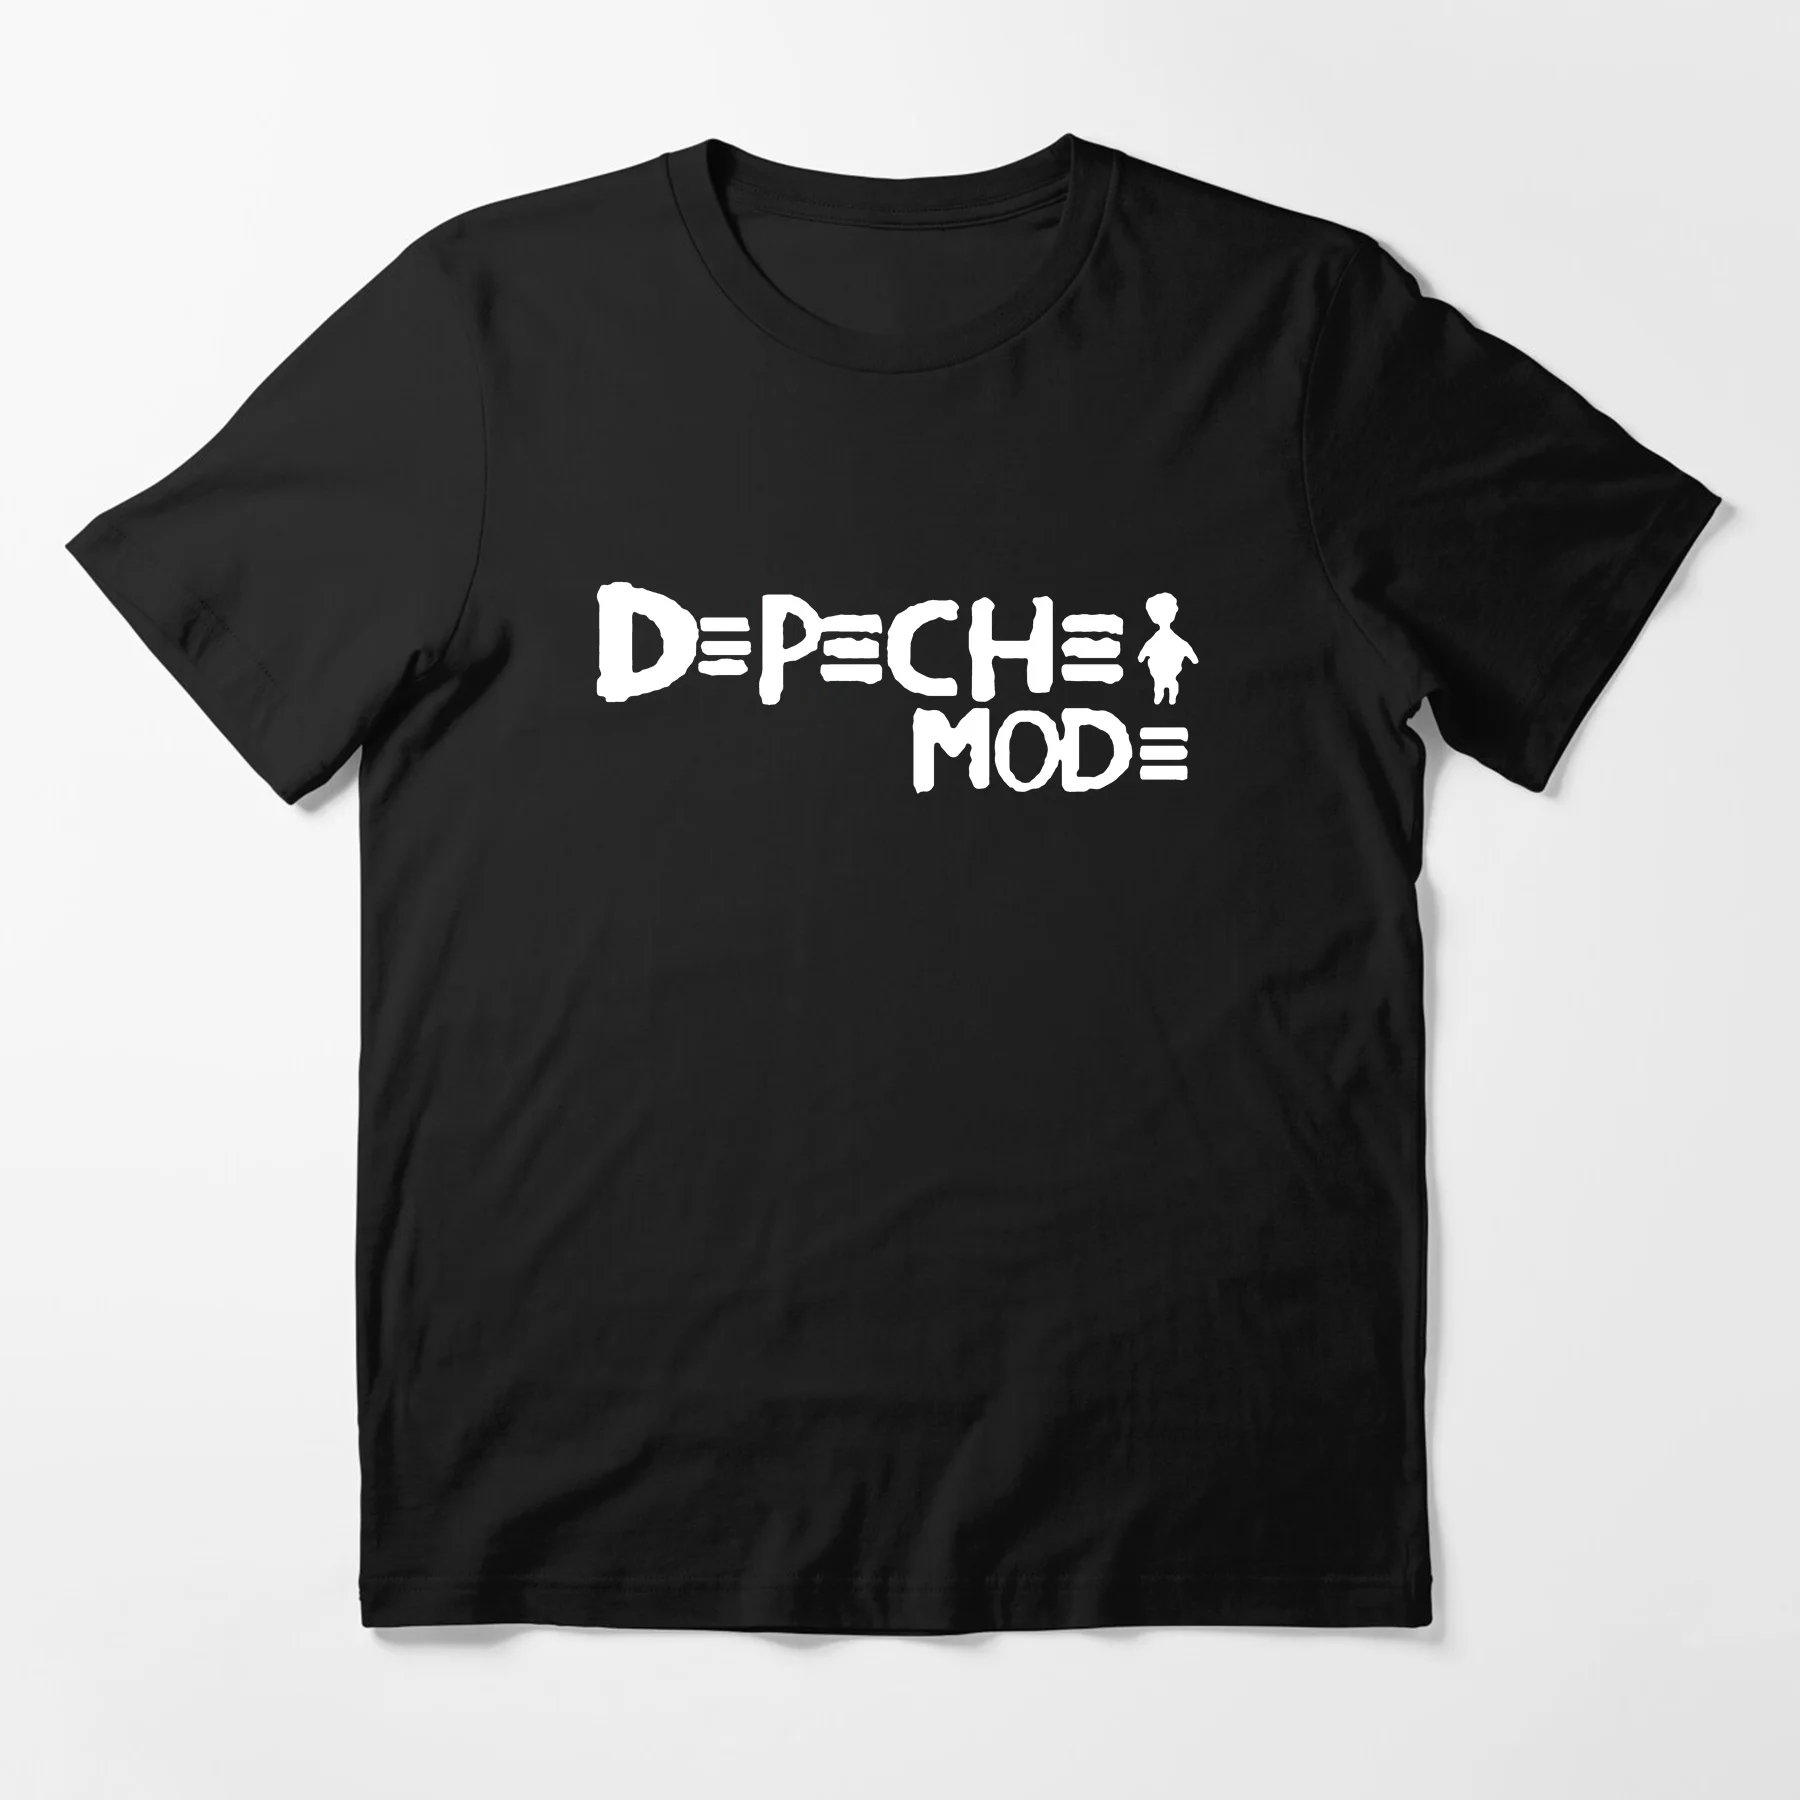 

Amazing Hot Selling Tees Male T Shirt Oversized Depeche Mode Rock Band Classic T-shirt Men T-shirts Graphic Short Sleeve S-3XL